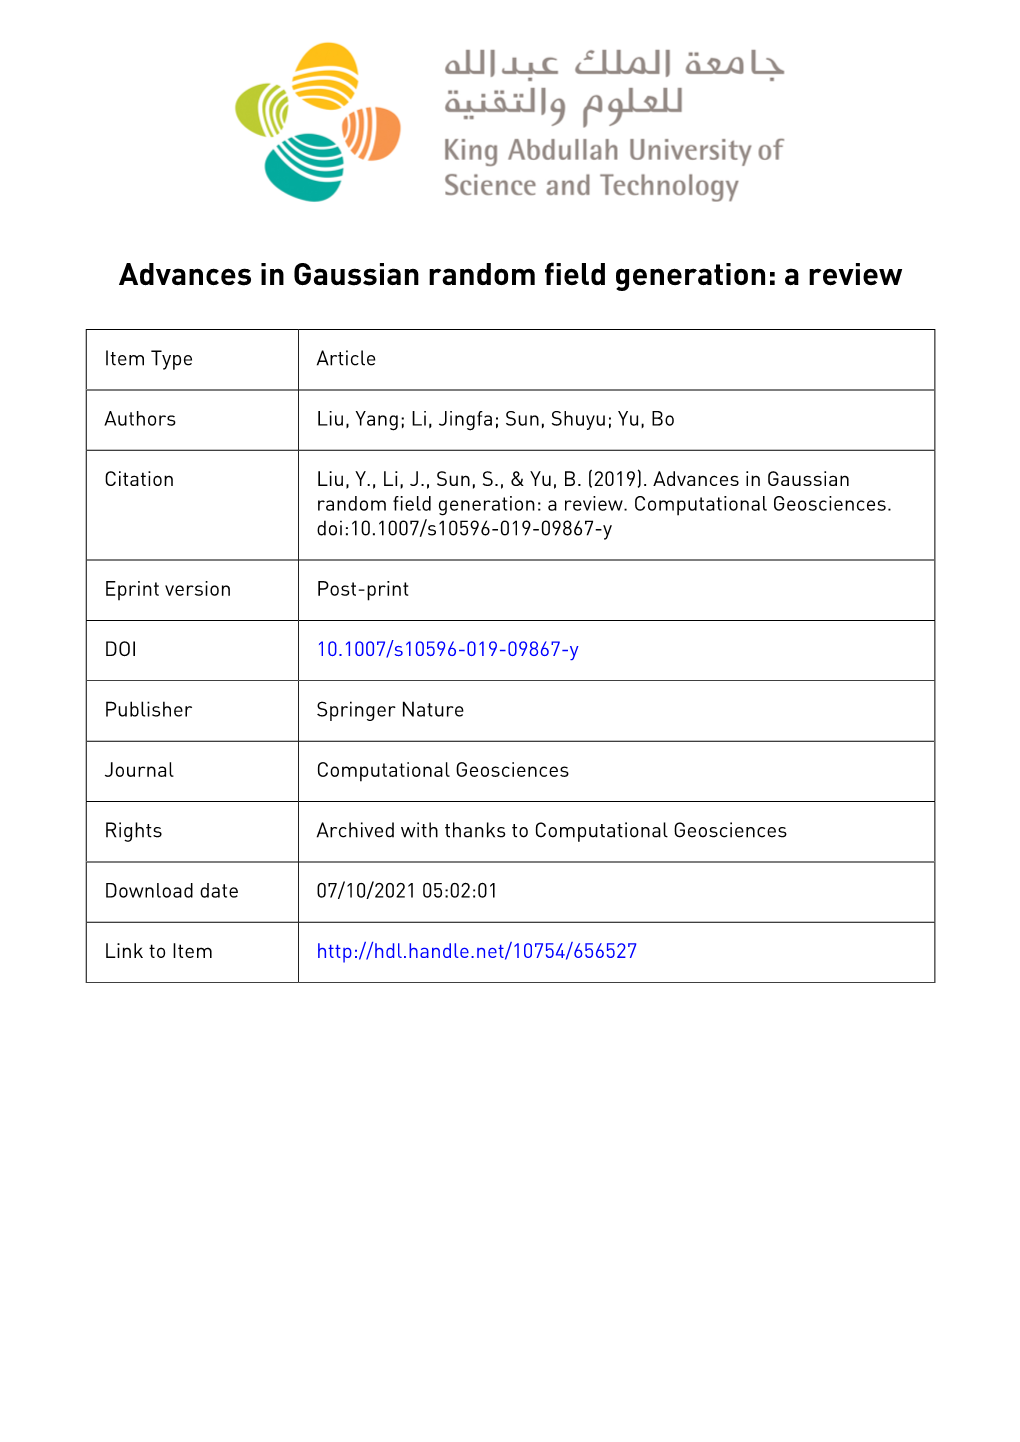 Advances in Gaussian Random Field Generation: a Review